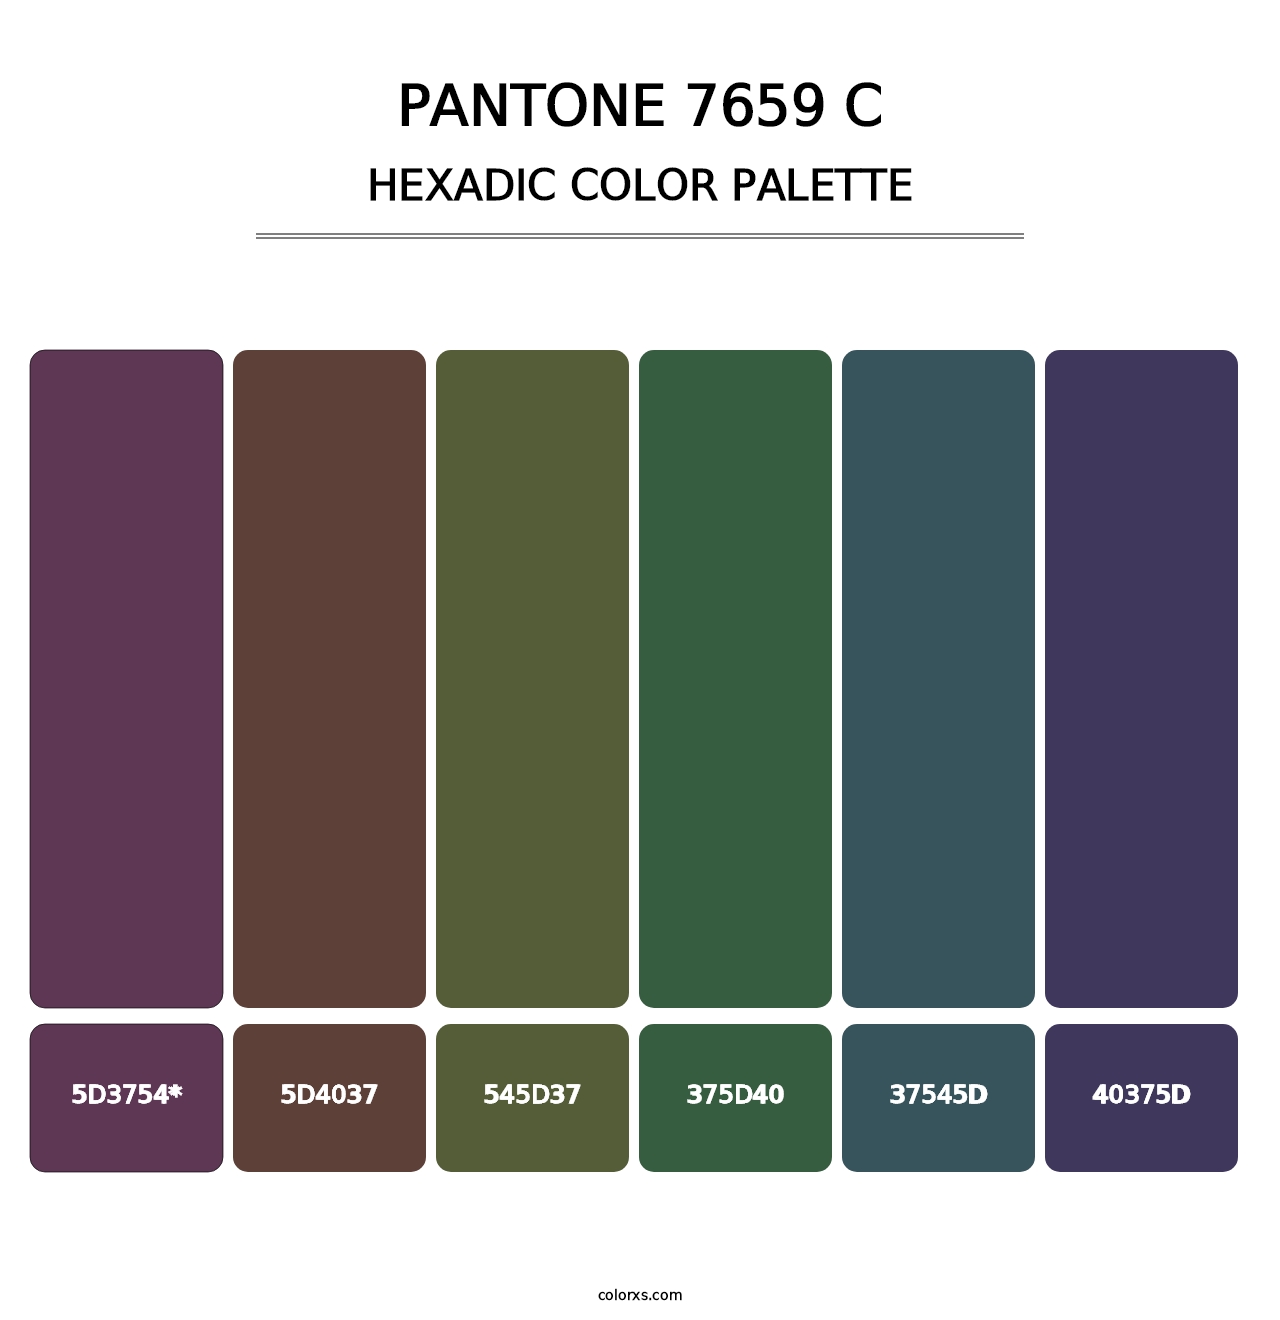 PANTONE 7659 C - Hexadic Color Palette